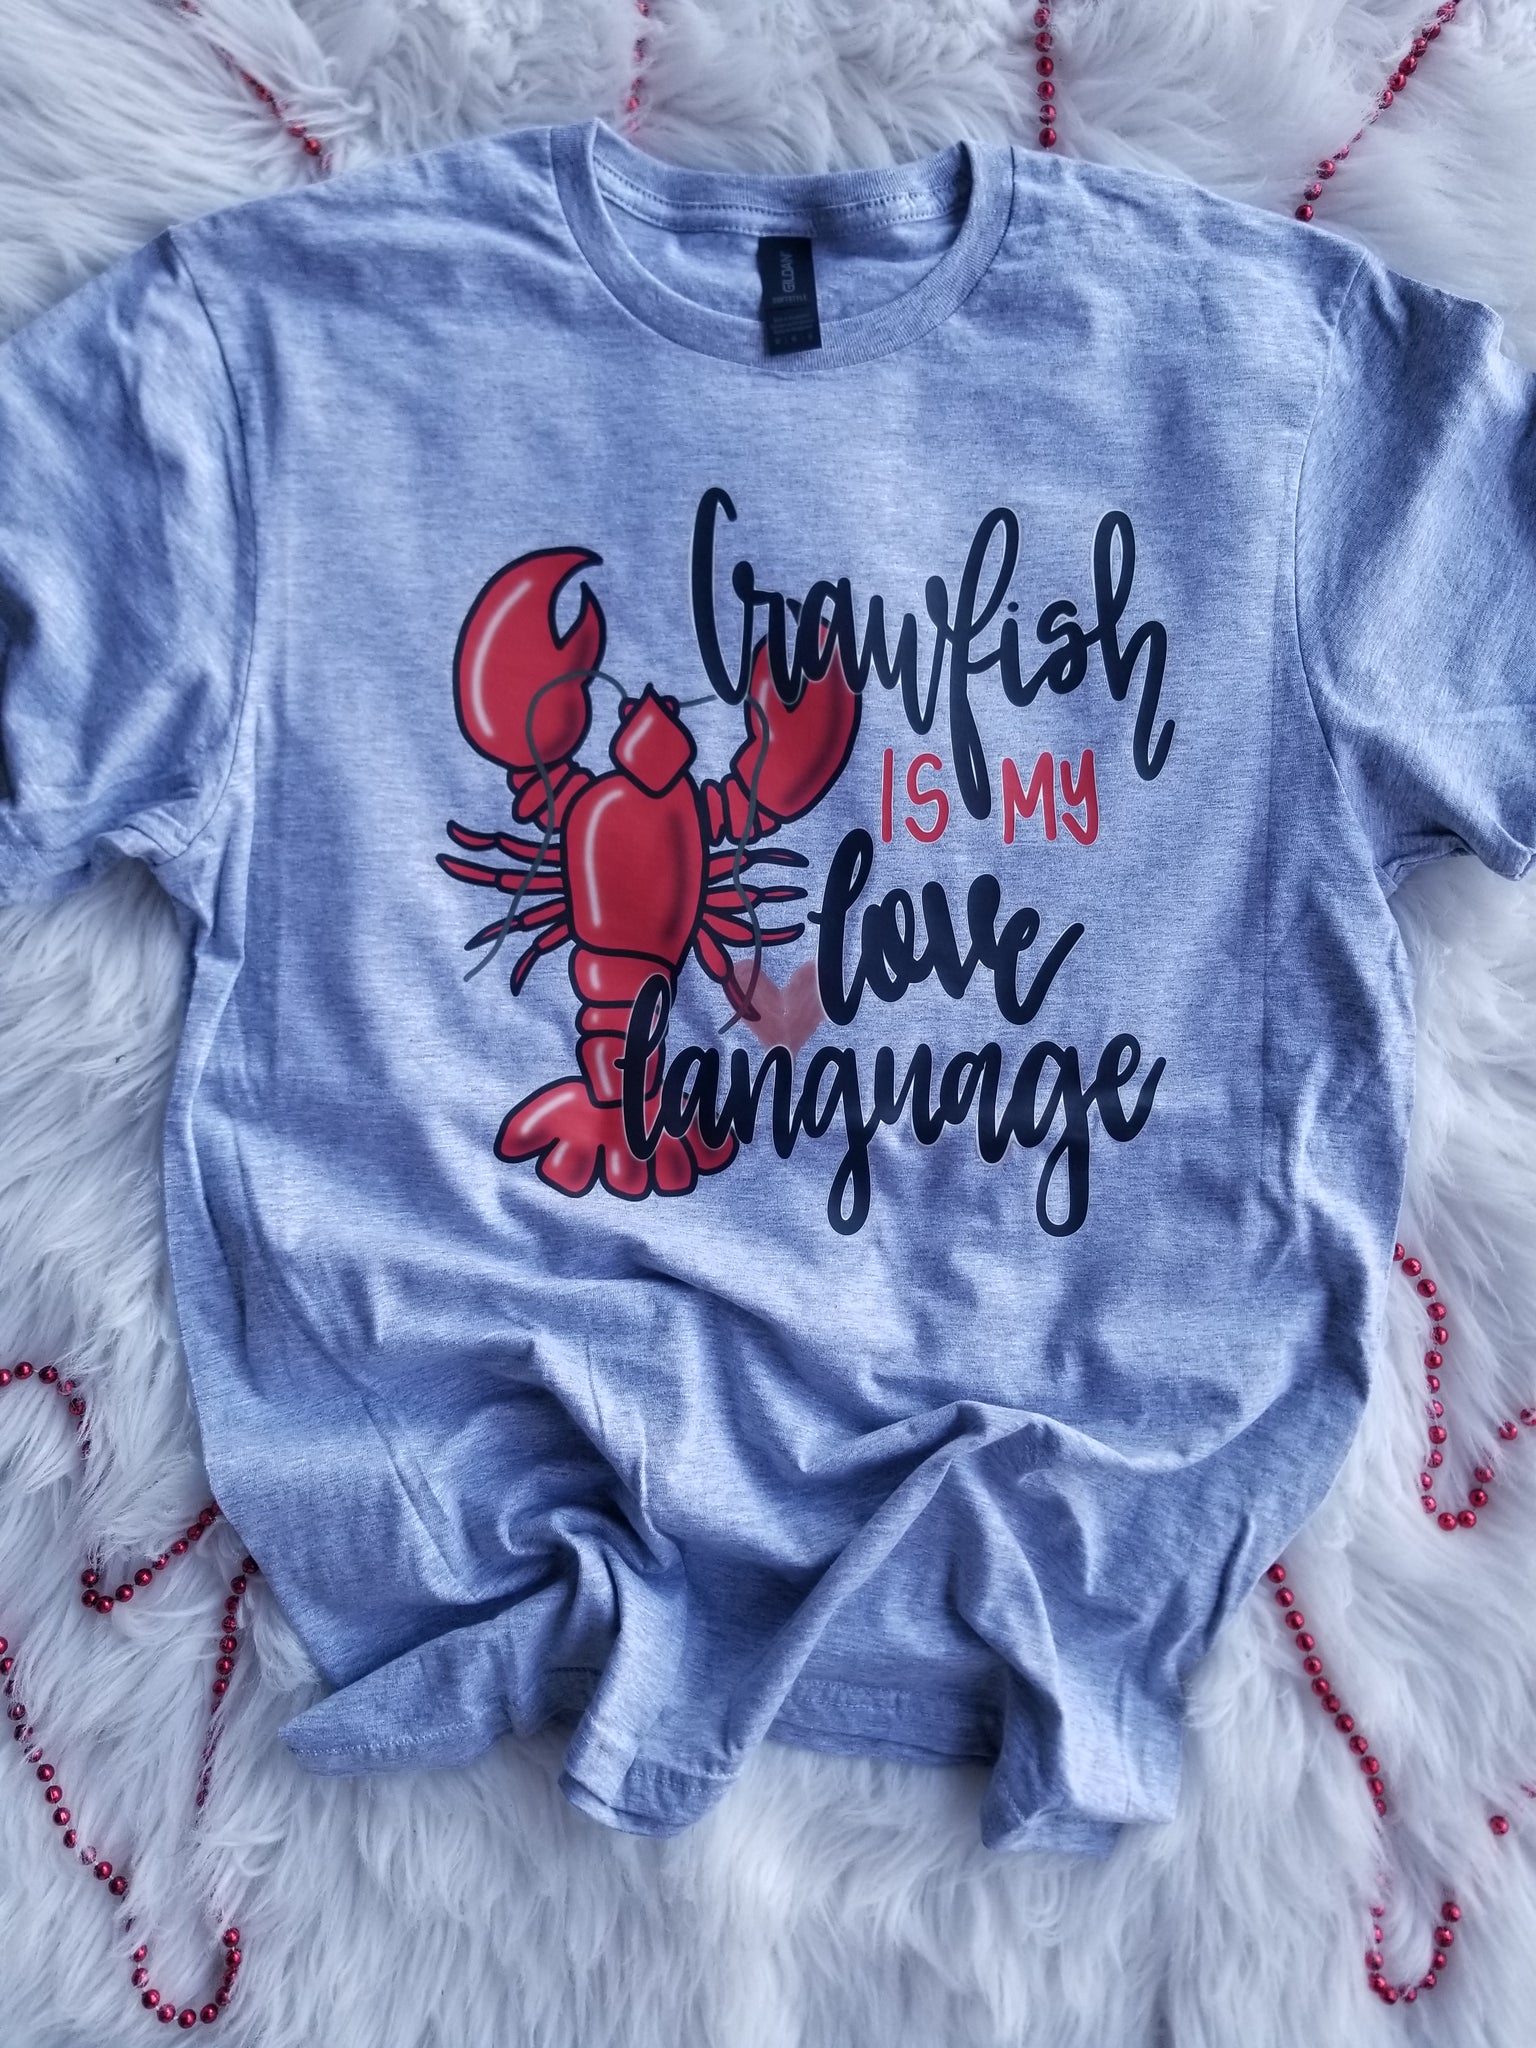 Crawfish is my love language